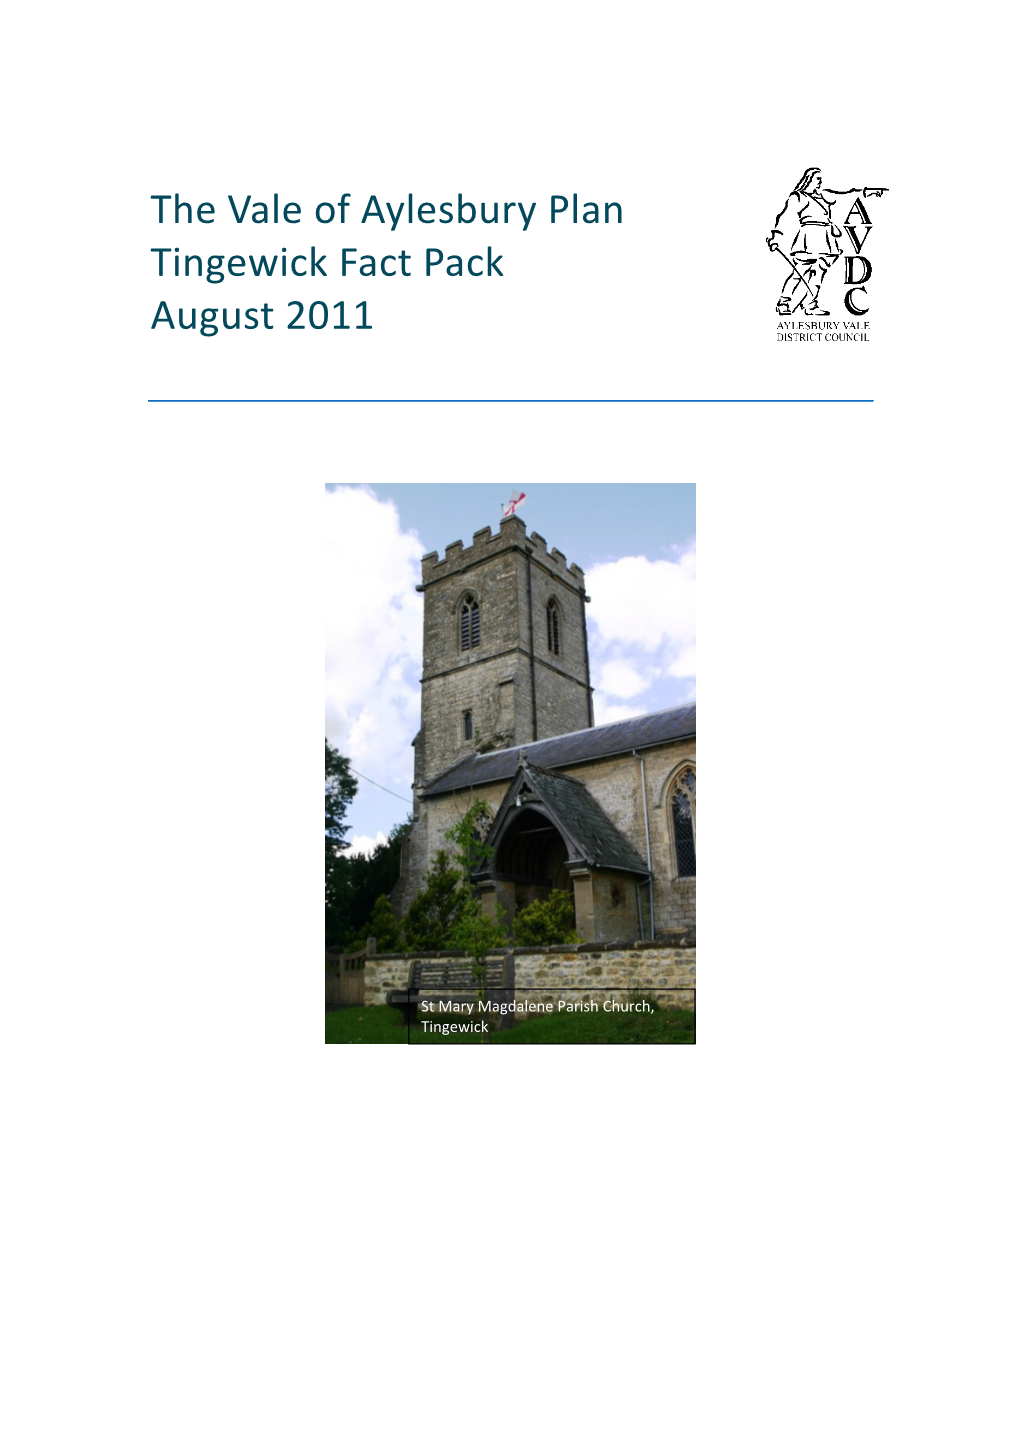 The Vale of Aylesbury Plan Tingewick Fact Pack August 2011